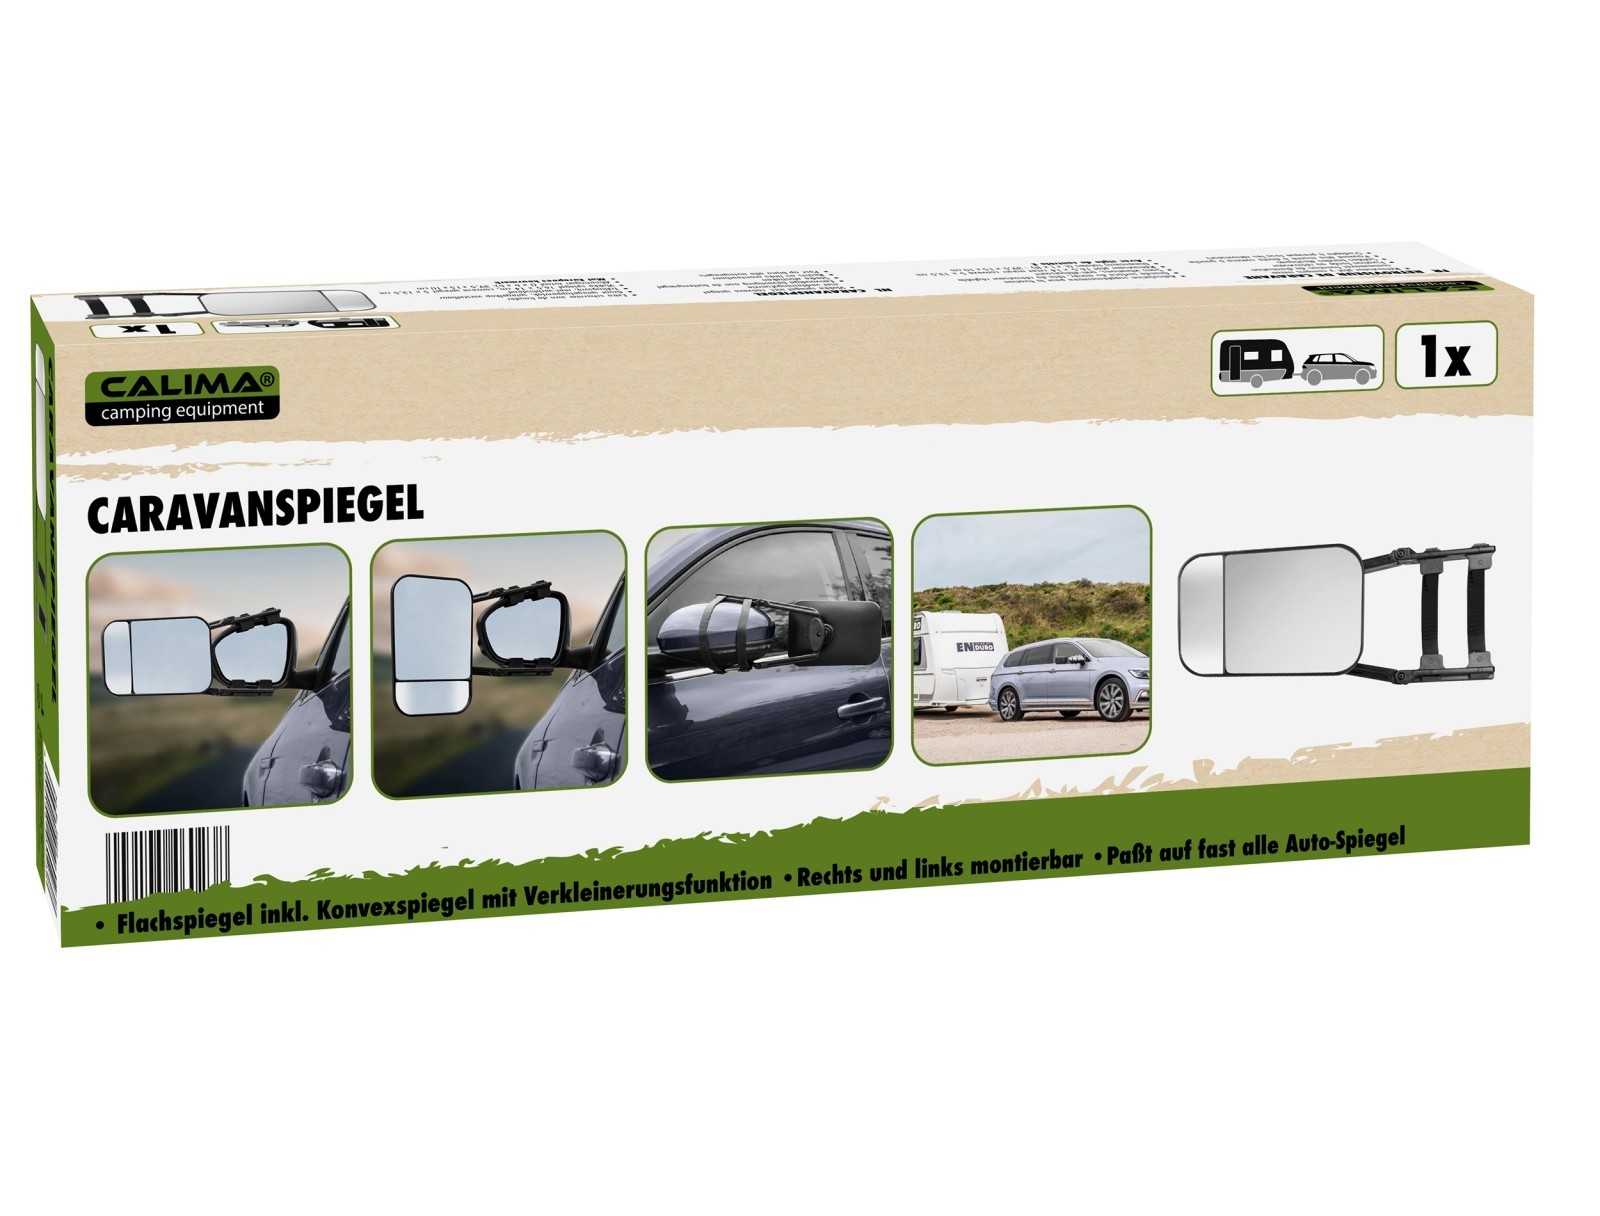 Caravanspiegel universal Wohnwagenspiegel 2er Set, E4-geprüft, 12